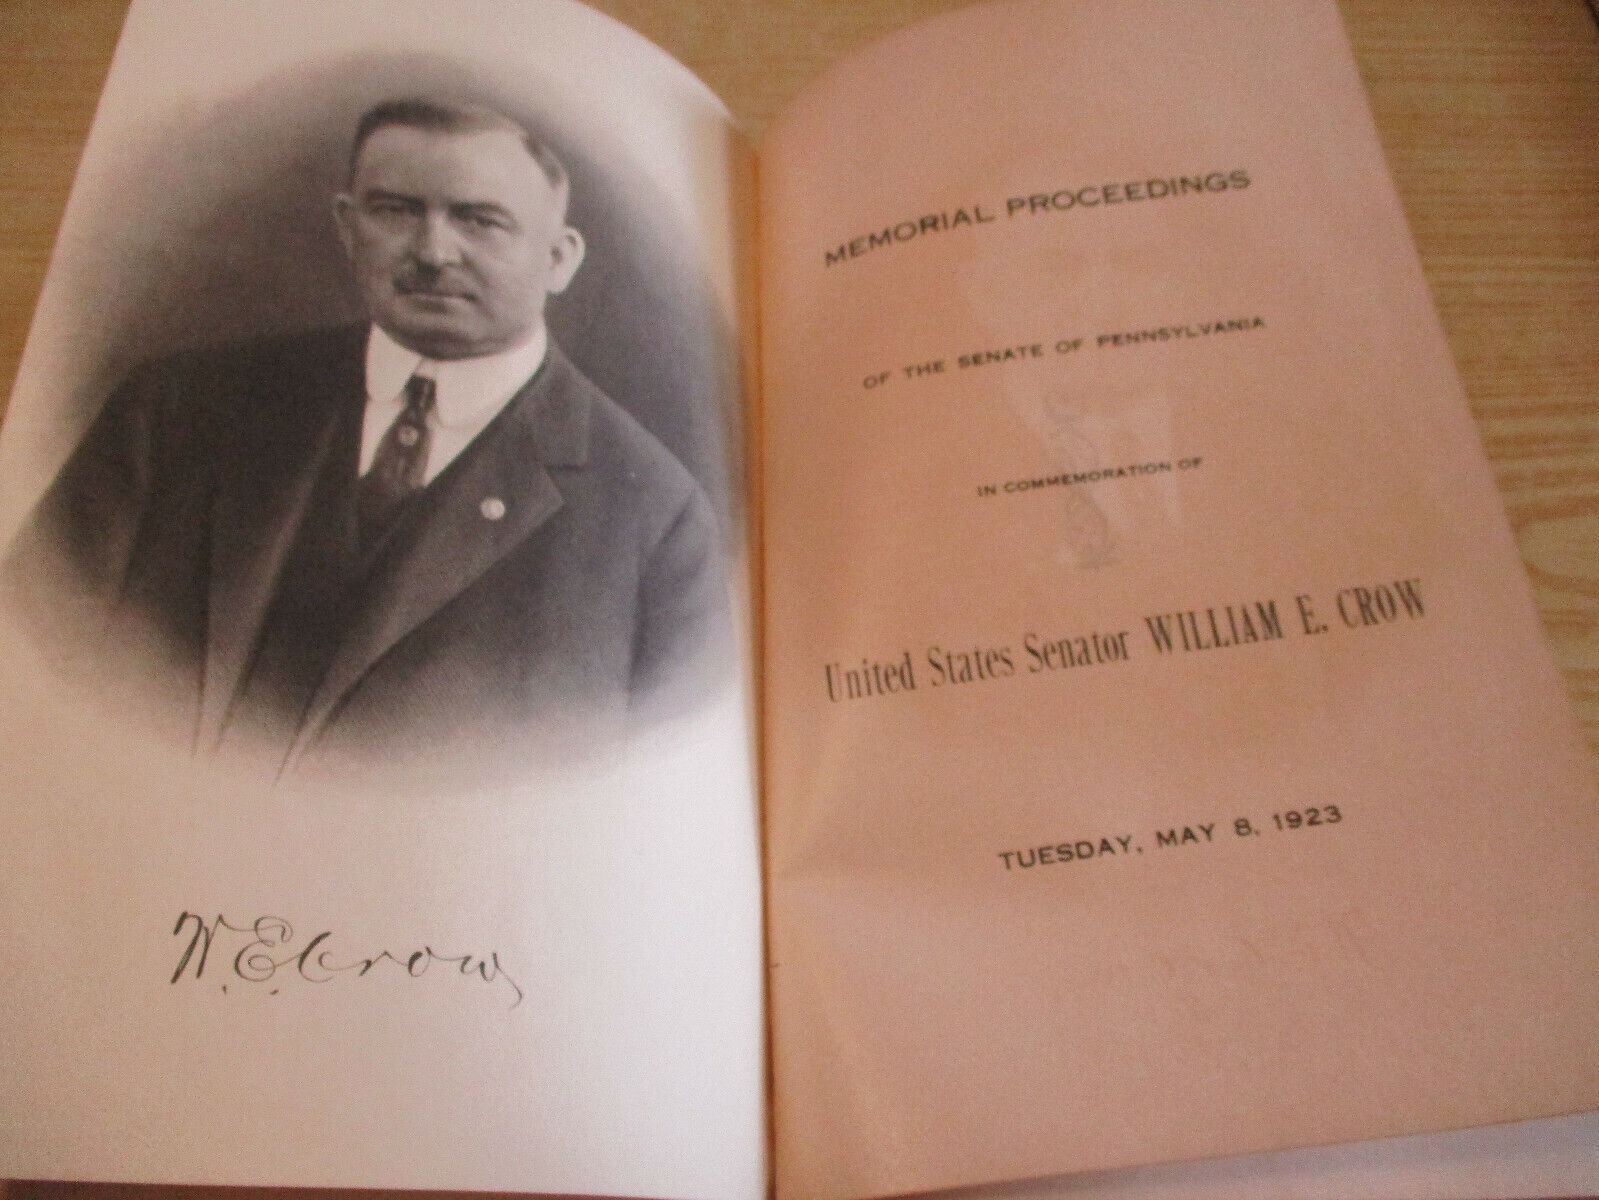 Memorial Proceedings Senate Pennsylvania May 8 1923 US Senator William E Crow